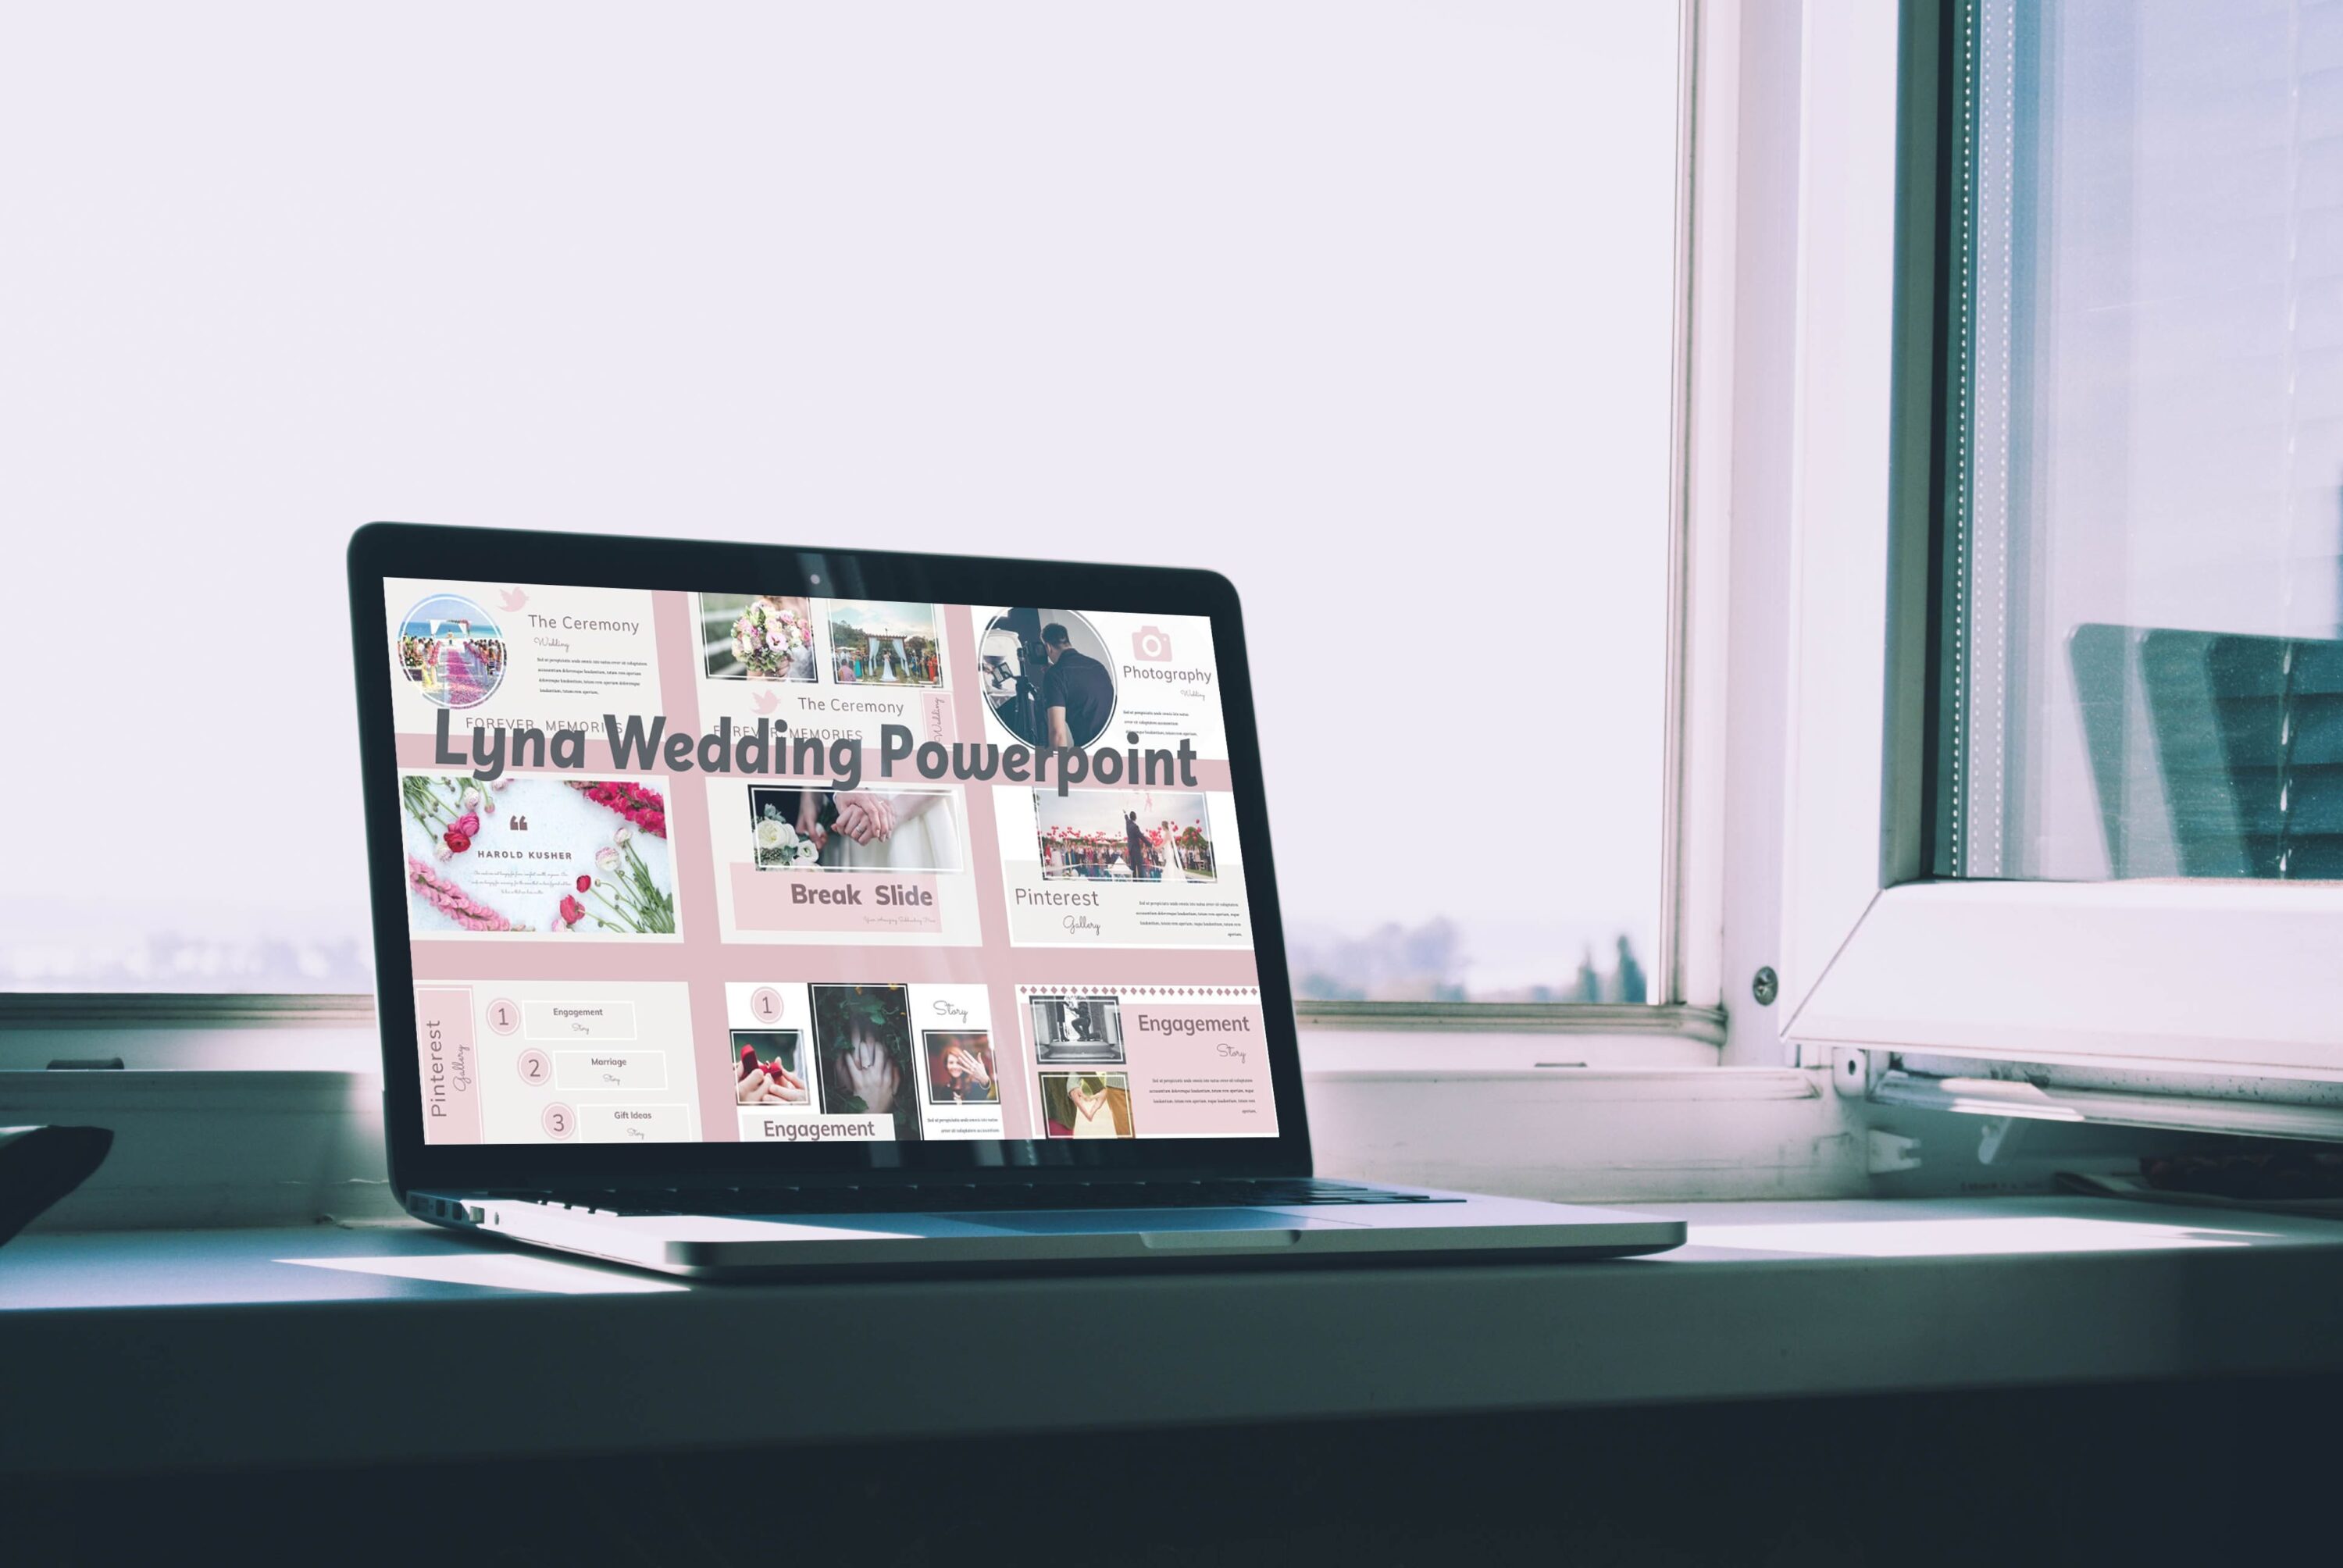 Lyna Wedding Powerpoint - laptop.